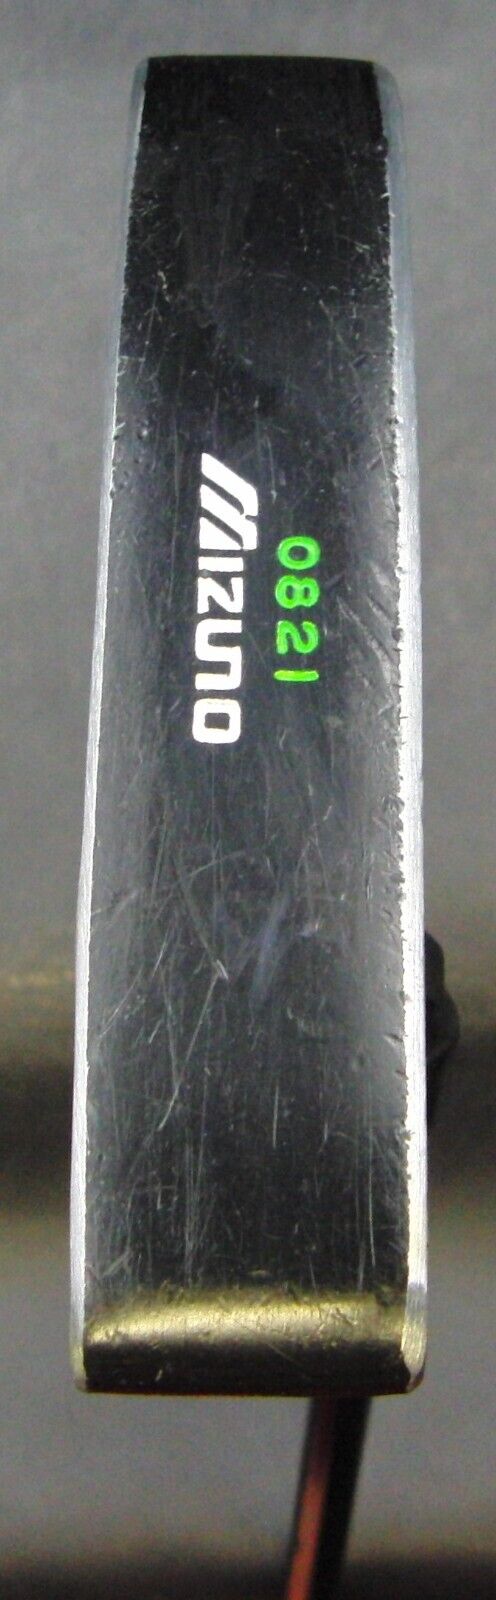 Mizuno 0821 Putter Graphite Shaft 88.5cm Length Mizuno Grip